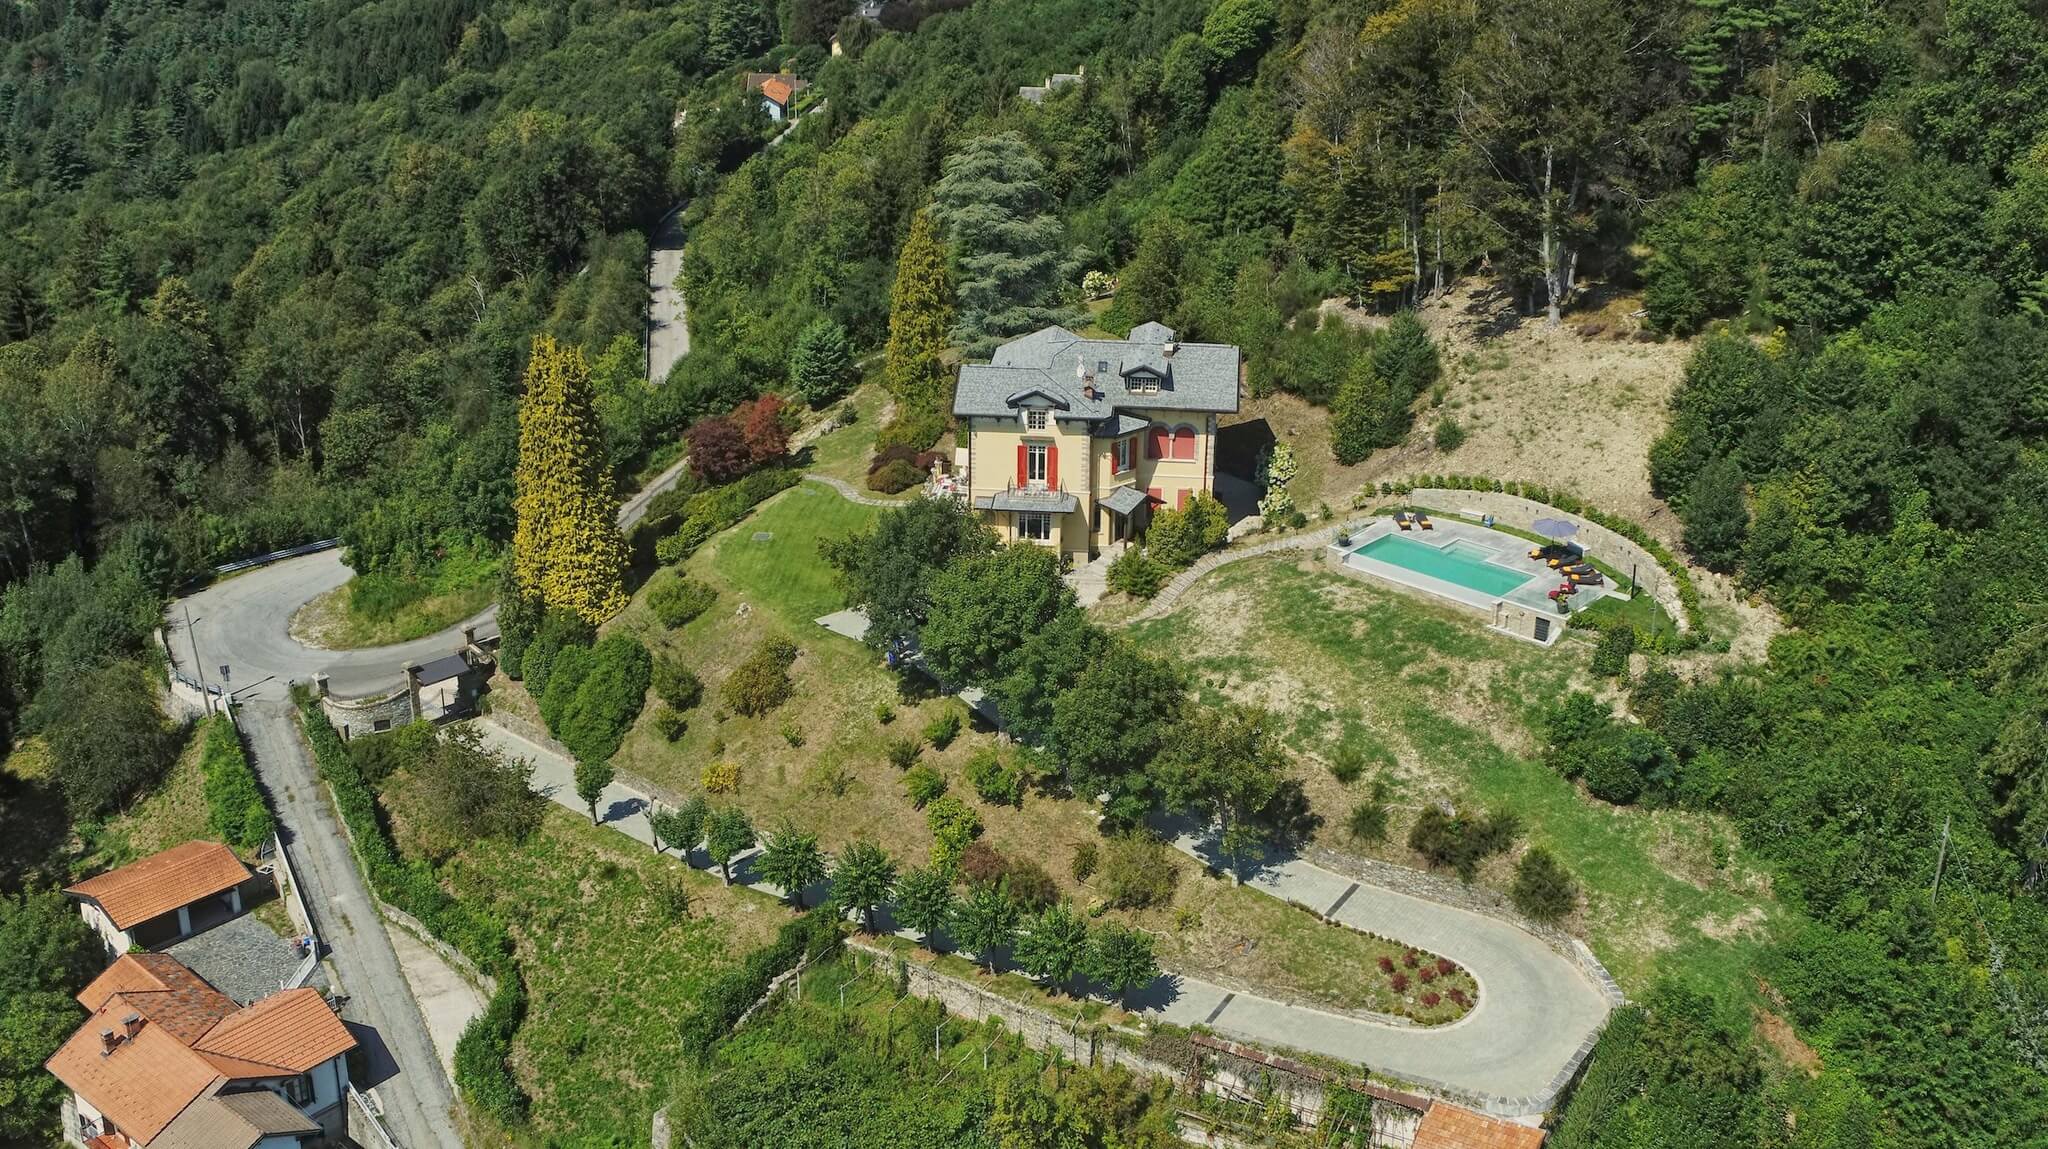 Aerial view of stunning Villa Confalonieri